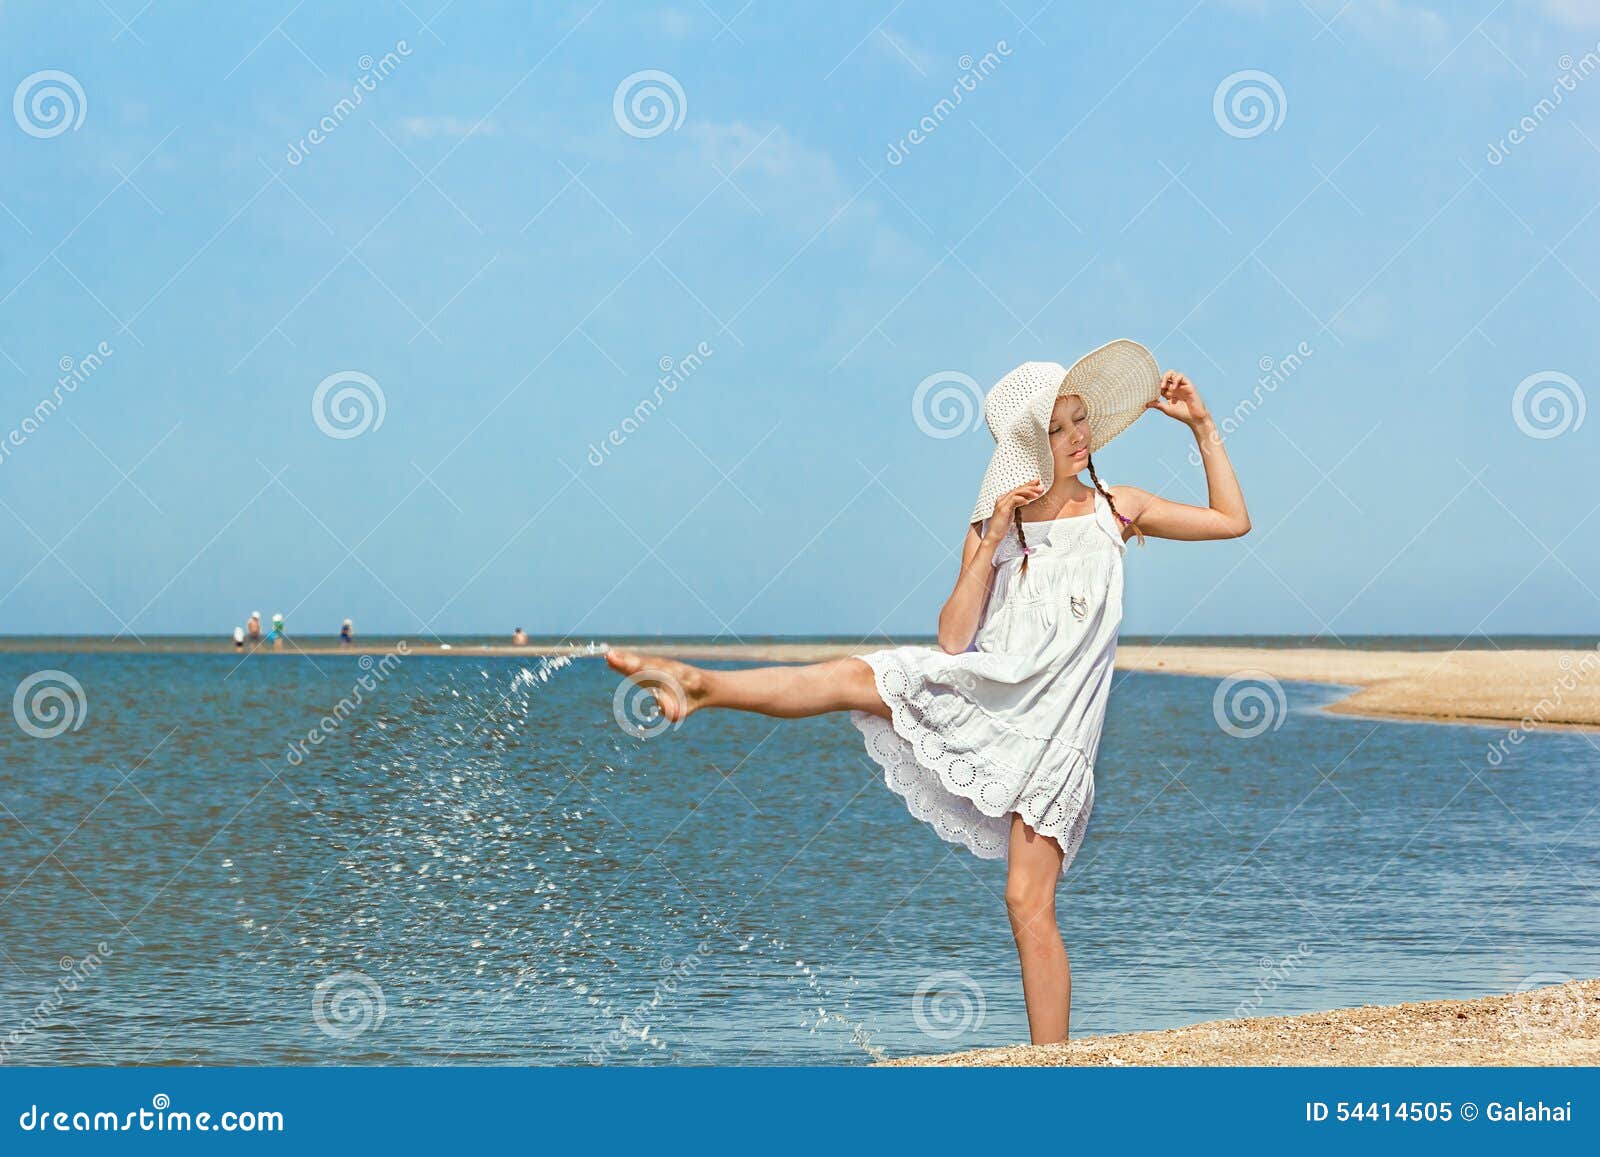 Girl Splashing Water on the Beach Stock Image - Image of recreation ...